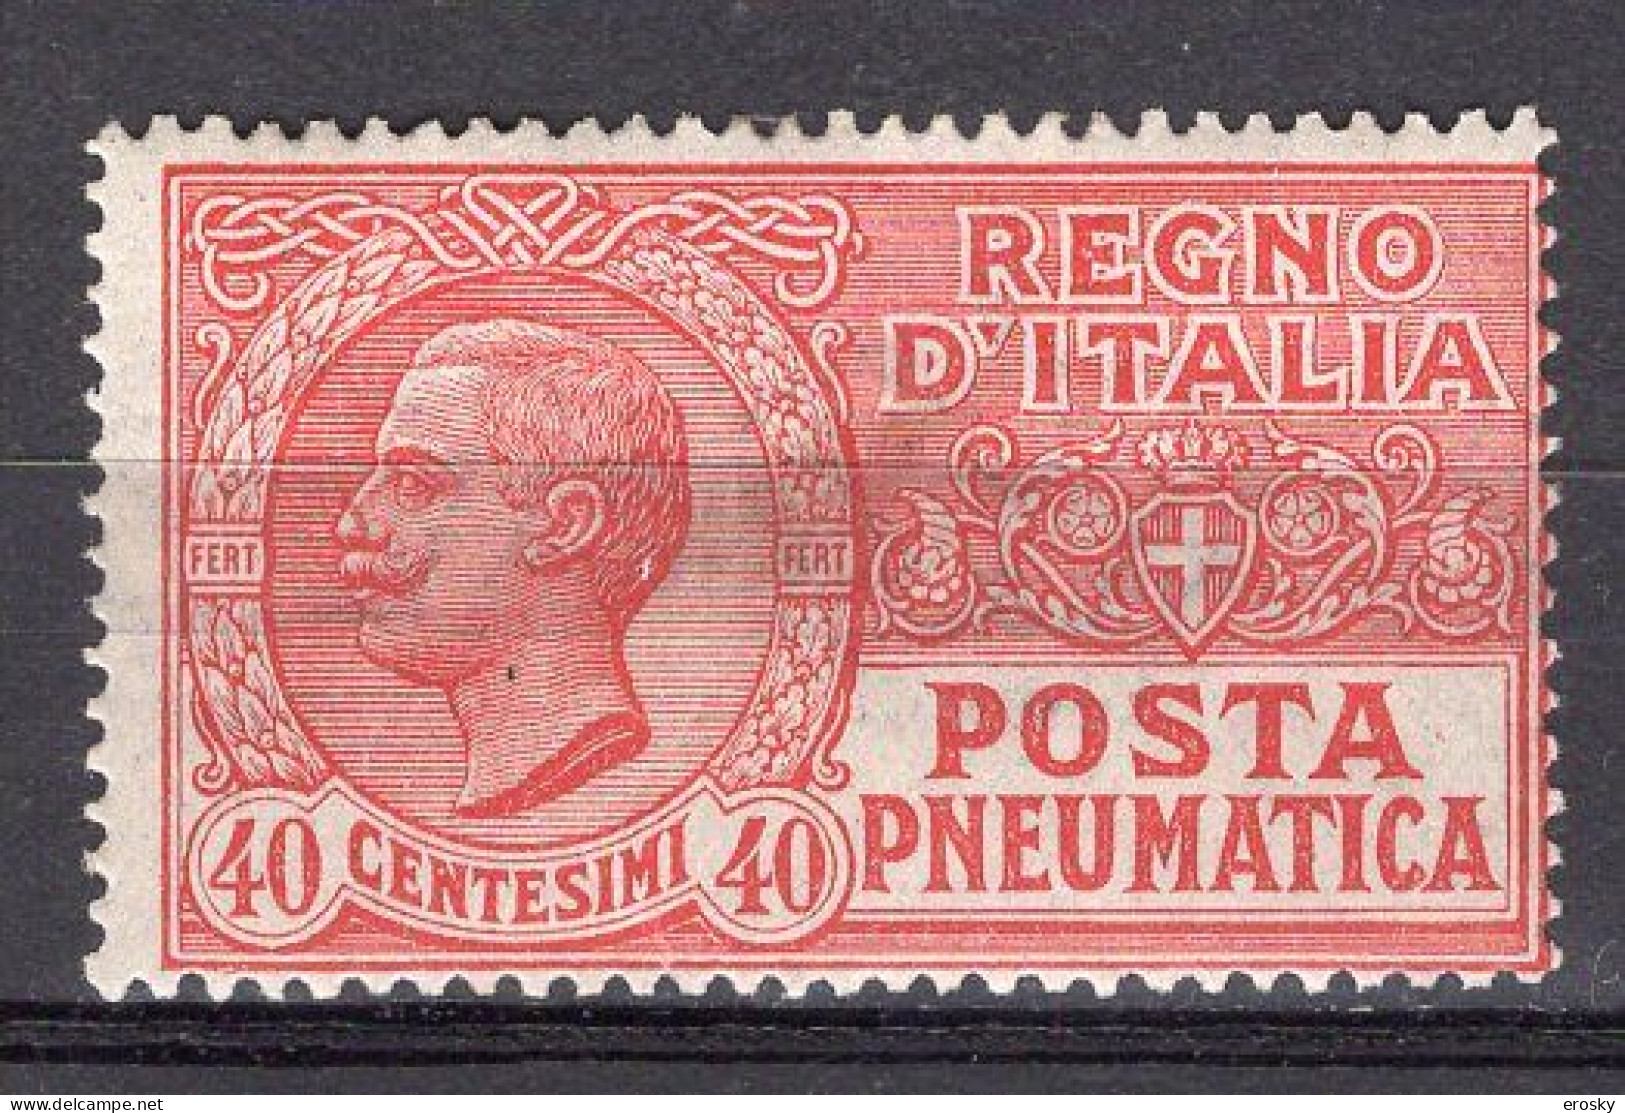 Z6073 - ITALIA REGNO PNEUMATICA SASSONE N°9 * - Pneumatic Mail